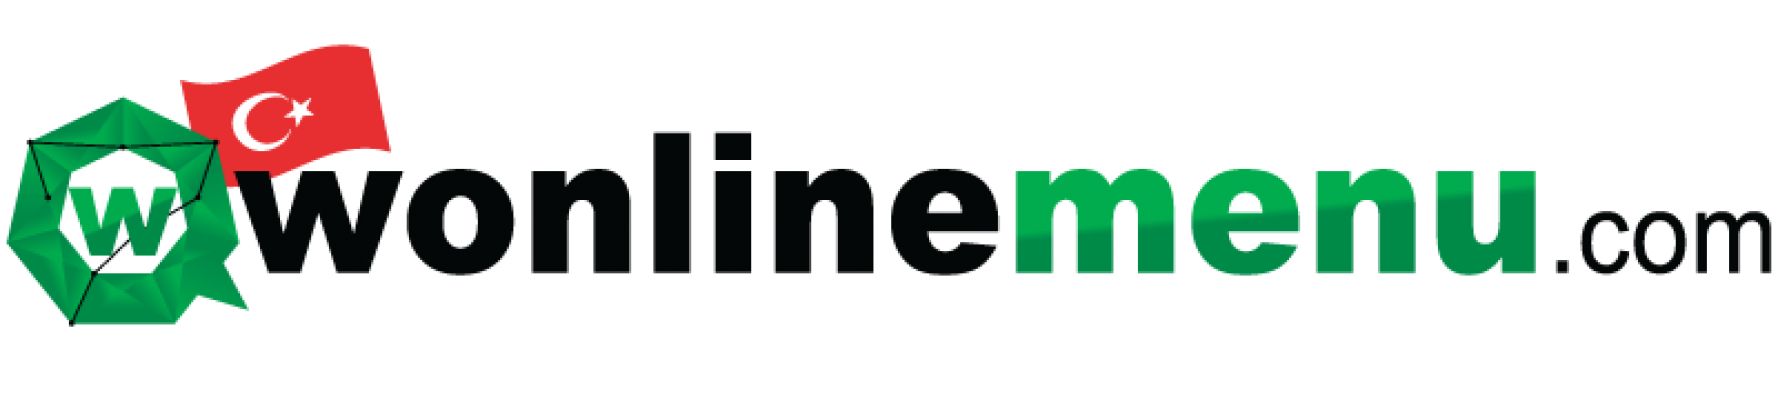 wonlinemenu.com | Türkçe